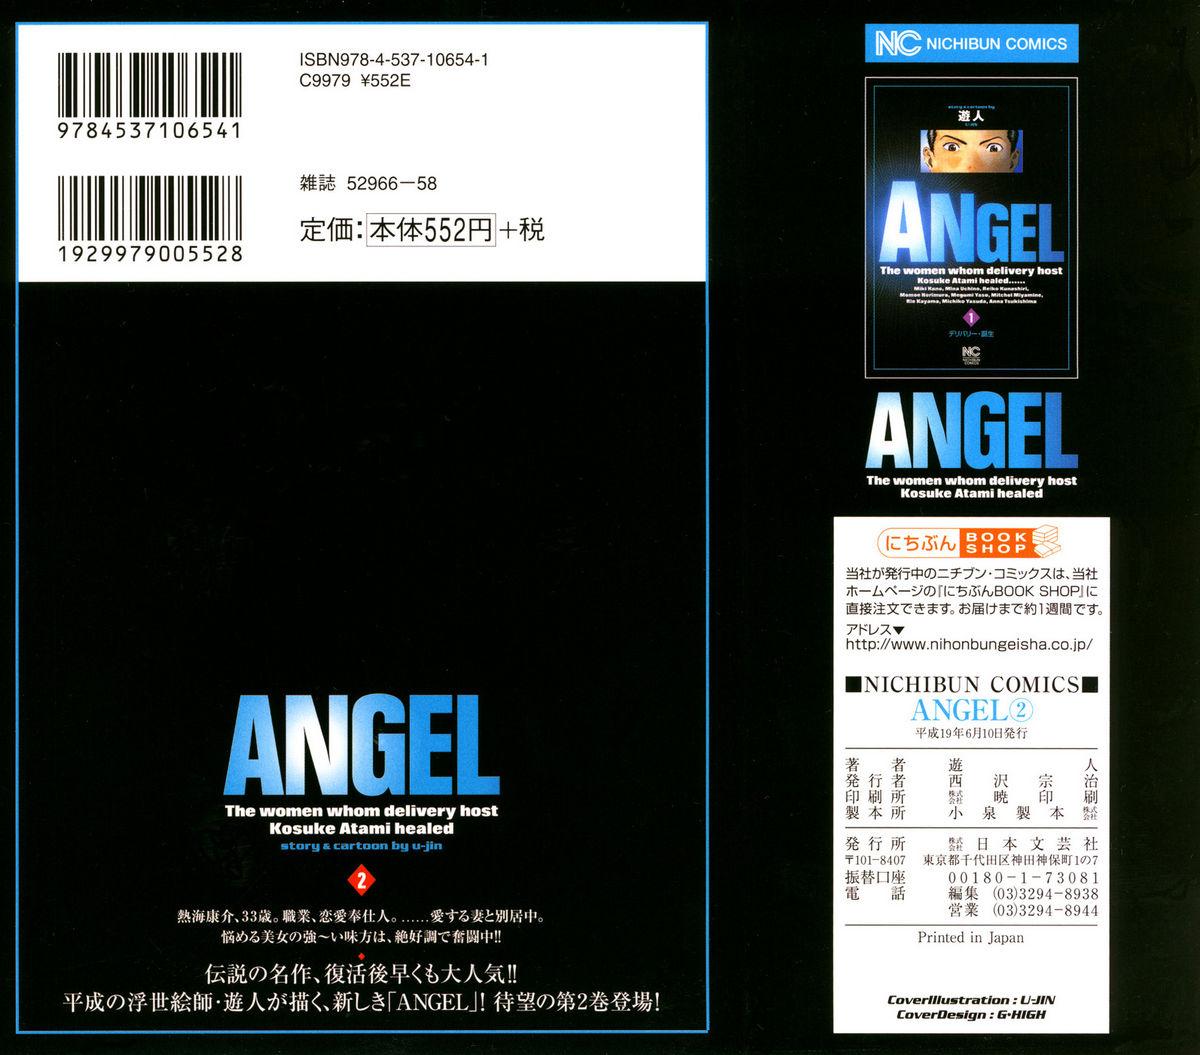 Angel - The Women Whom Delivery Host Kosuke Atami Healed Vol.02 3